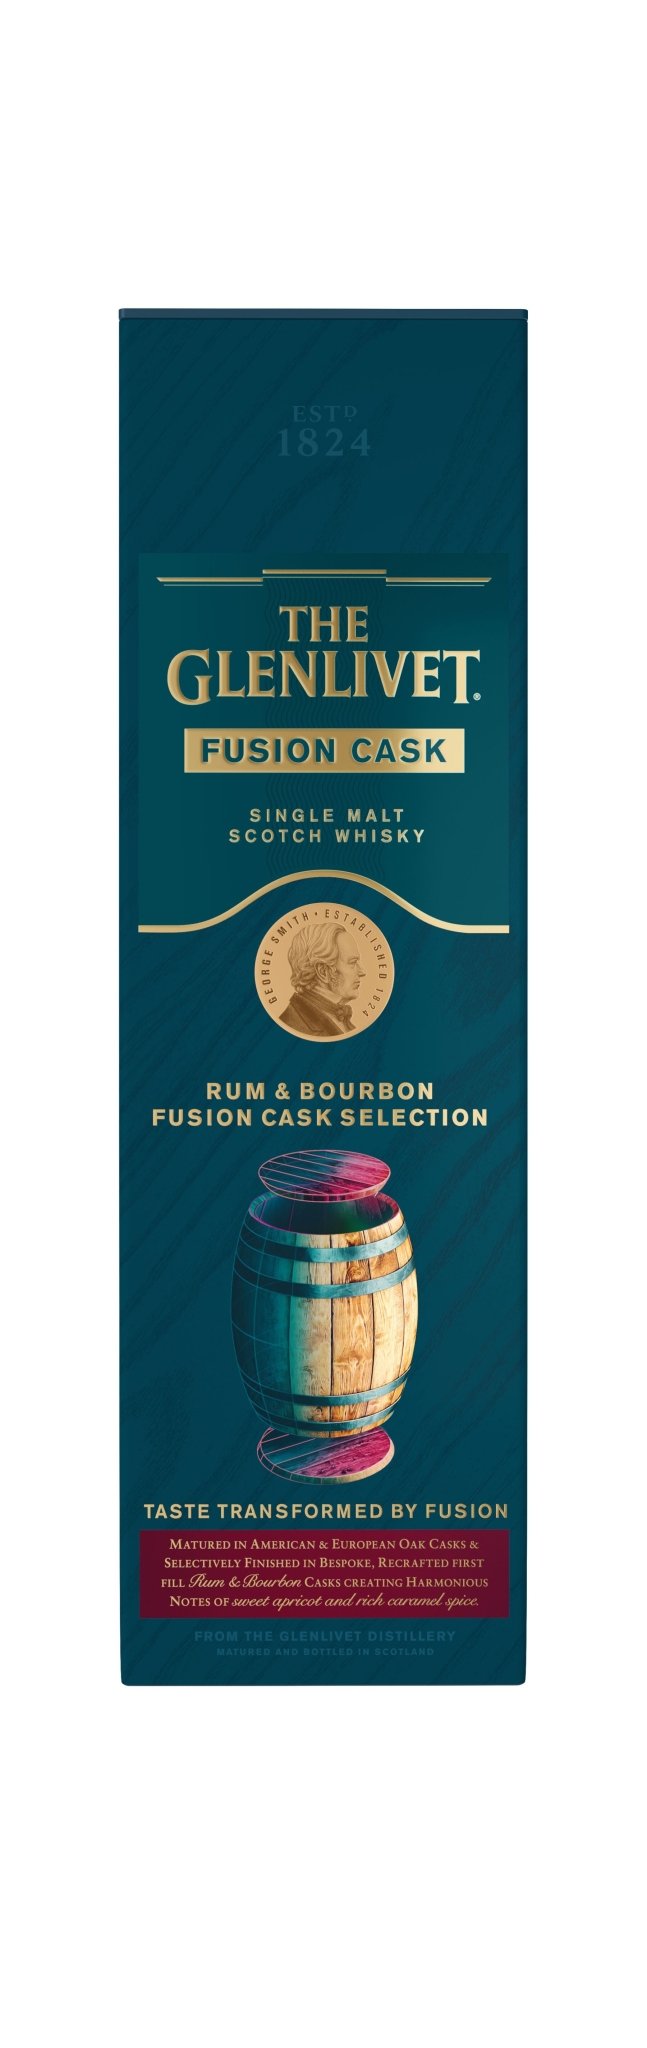 The Glenlivet Rum & Bourbon Fusion Cask Selection Scotch The Glenlivet   